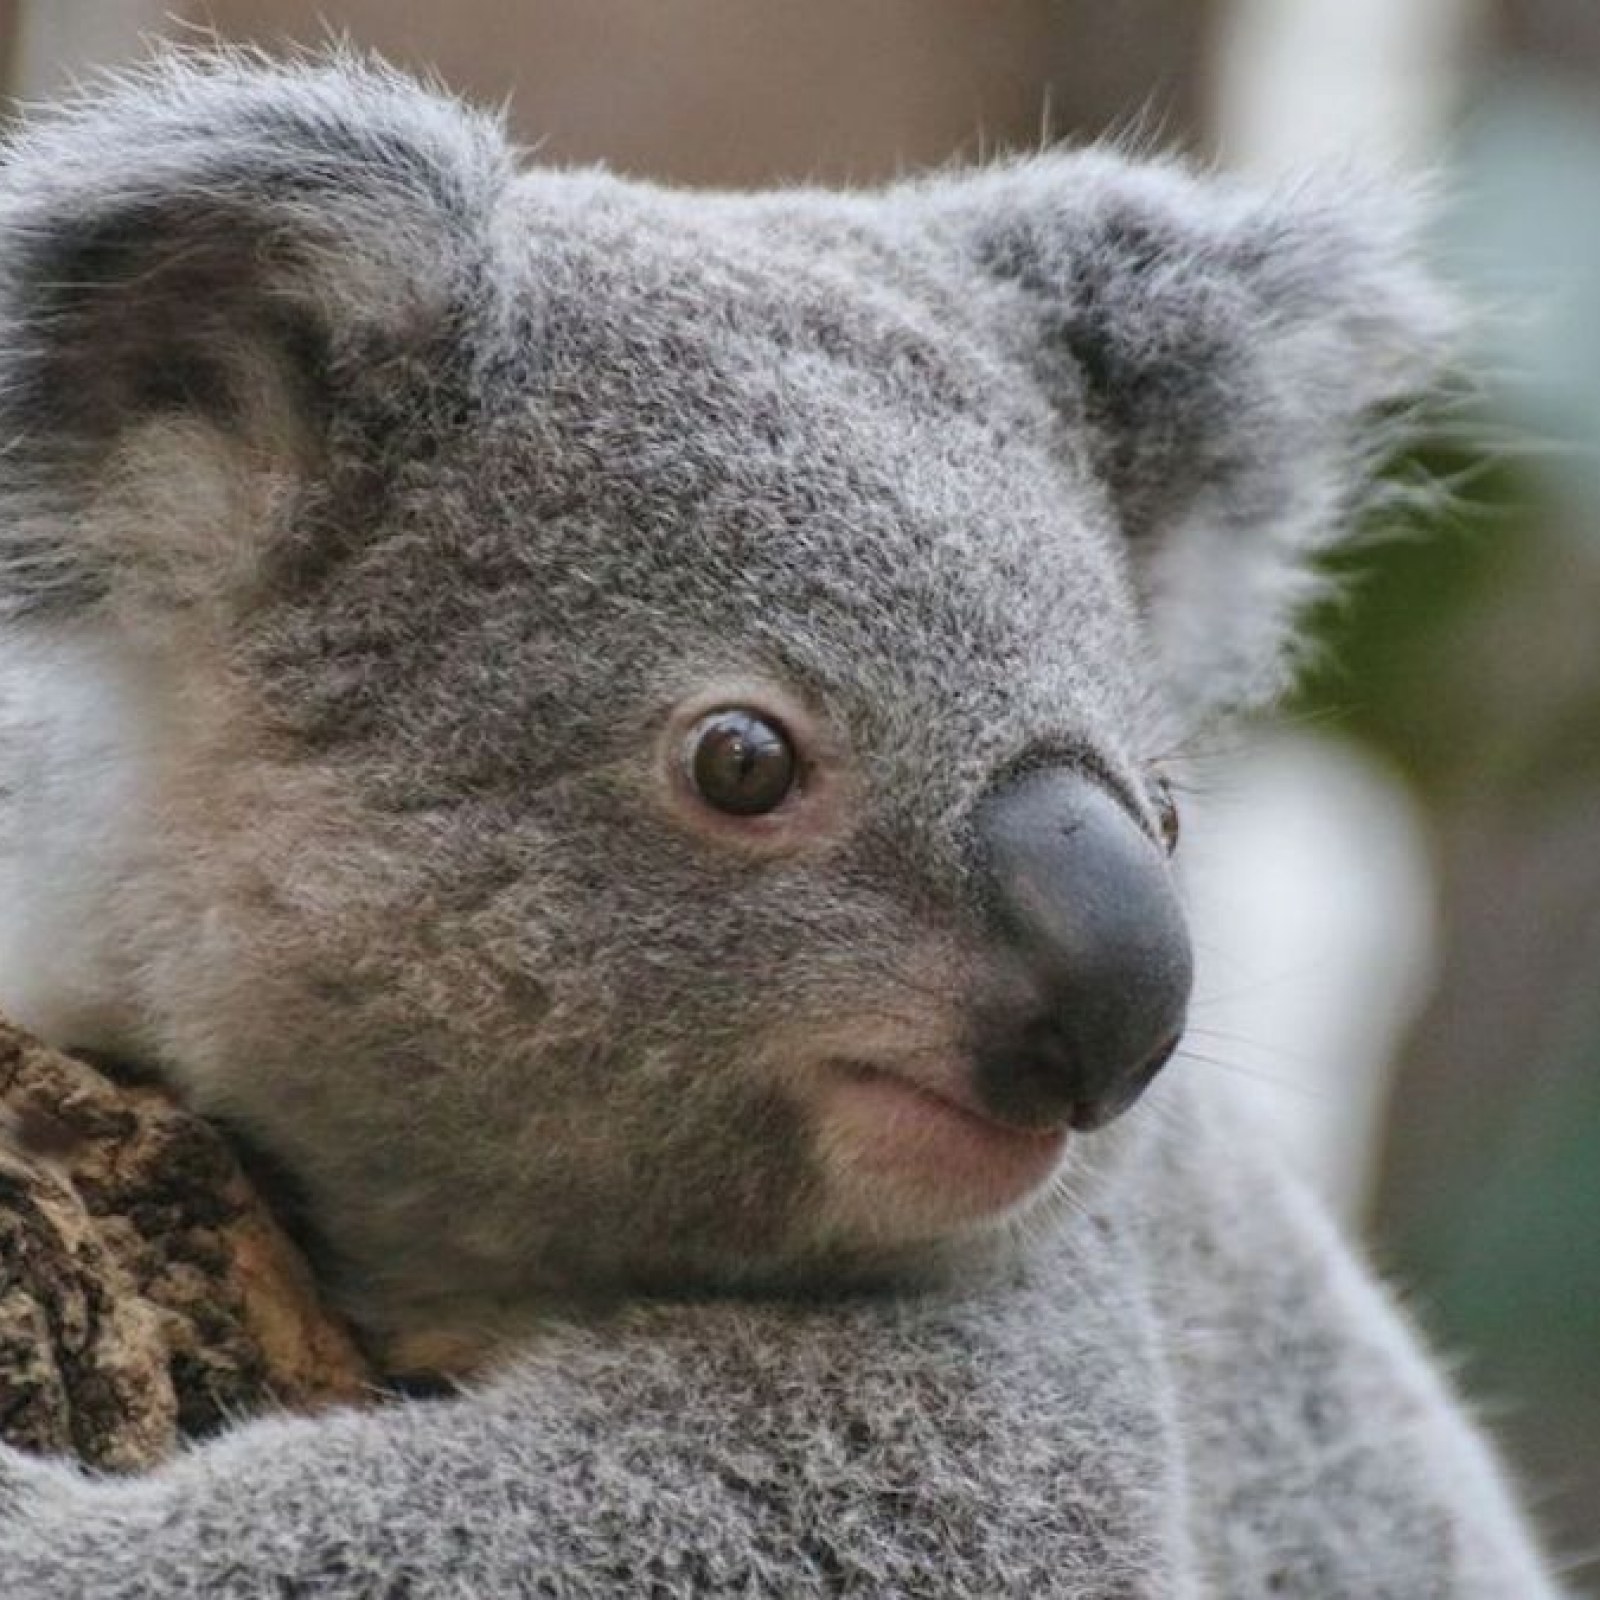 https://d.newsweek.com/en/full/2035608/tarni-koala-bear-german-zoo.jpg?w=1600&h=1600&q=88&f=9b747effaad45c2bdfd3949907601063